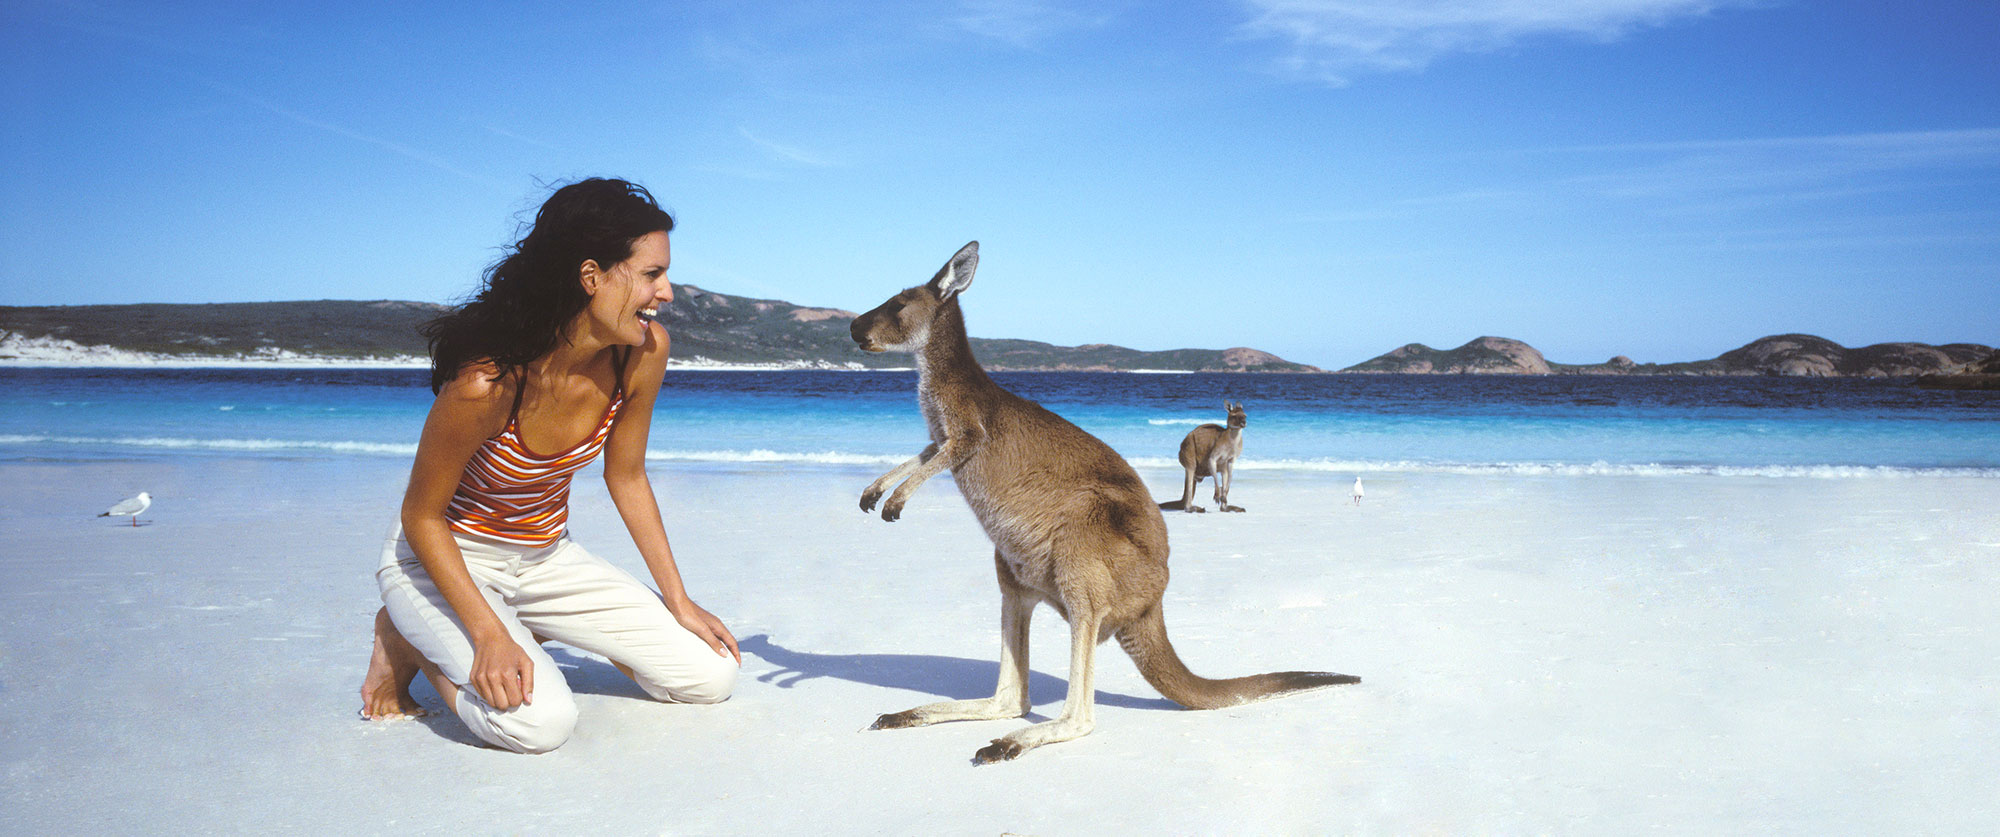 Kangaroo on Lucky Bay